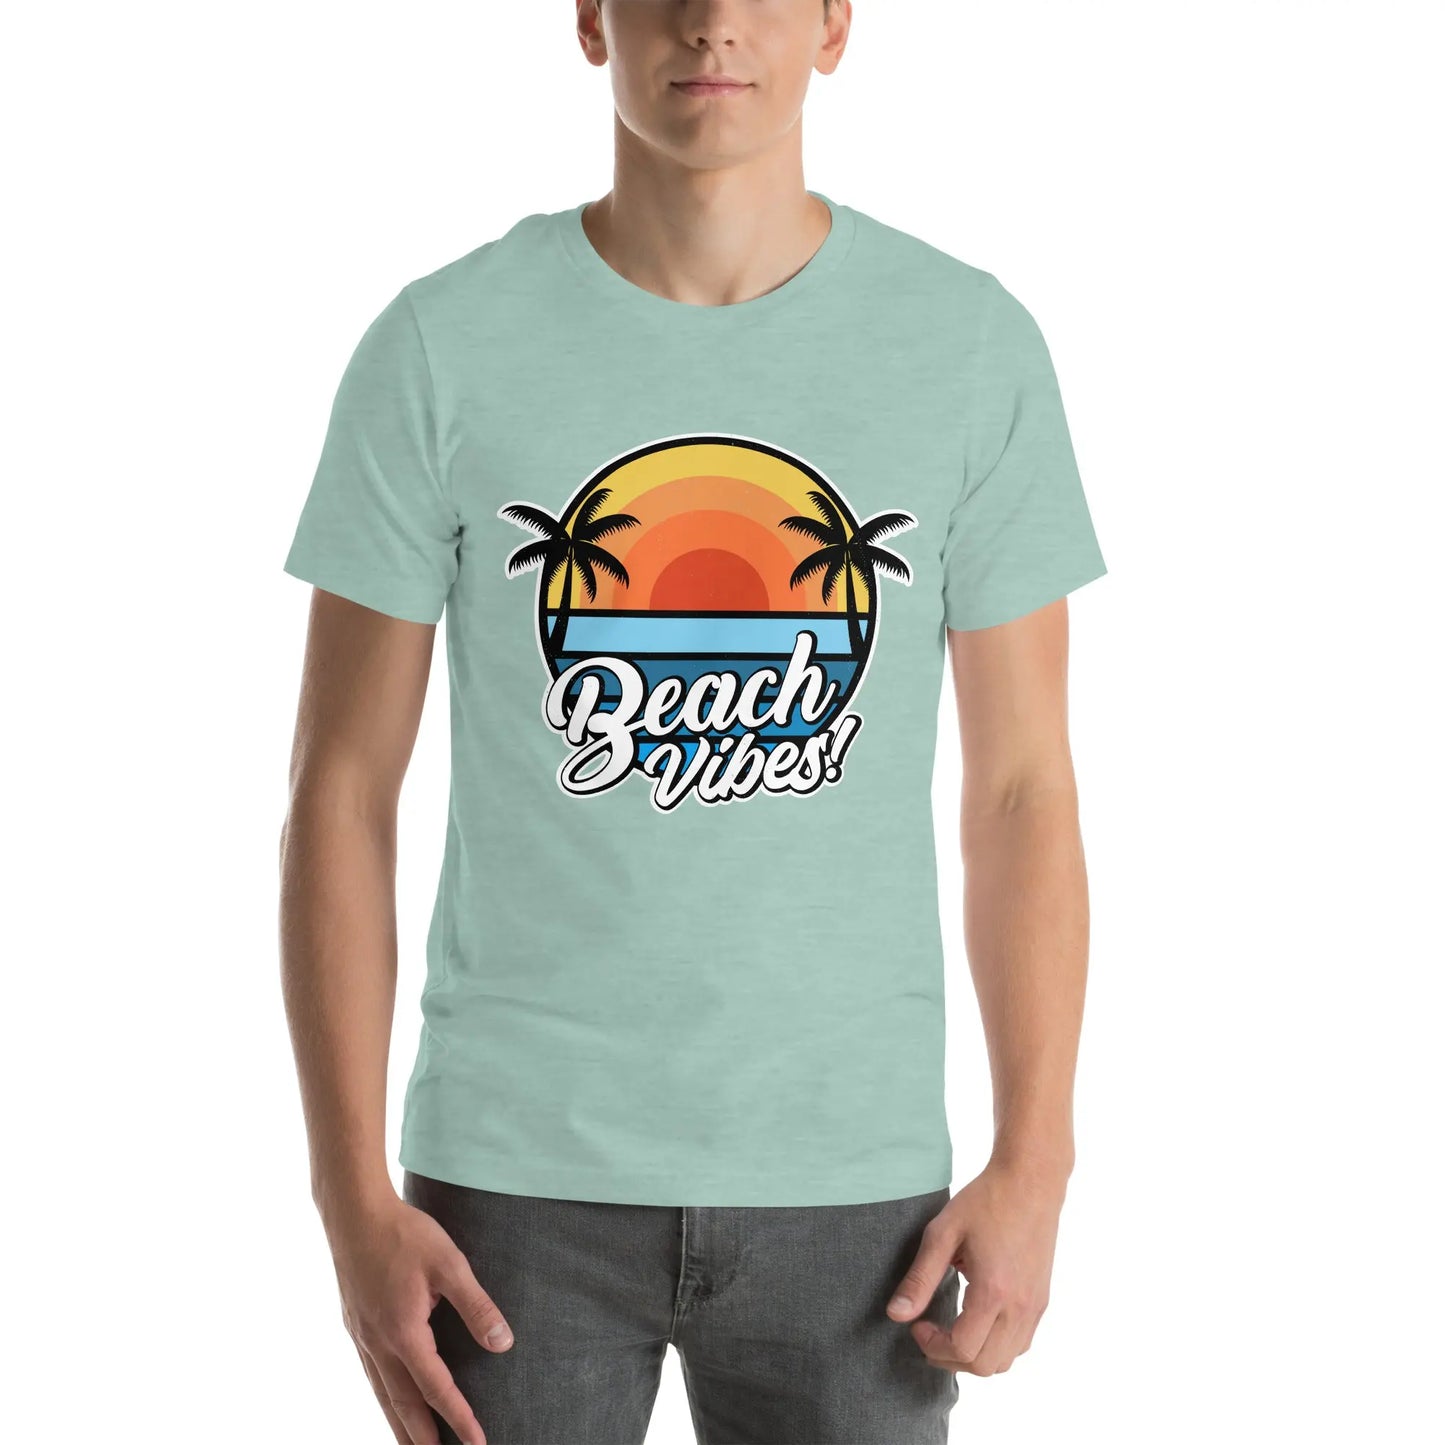 Beach Vibes with this Coastal Adult Unisex T-Shirt - Coastal Journeyz9496443_9388